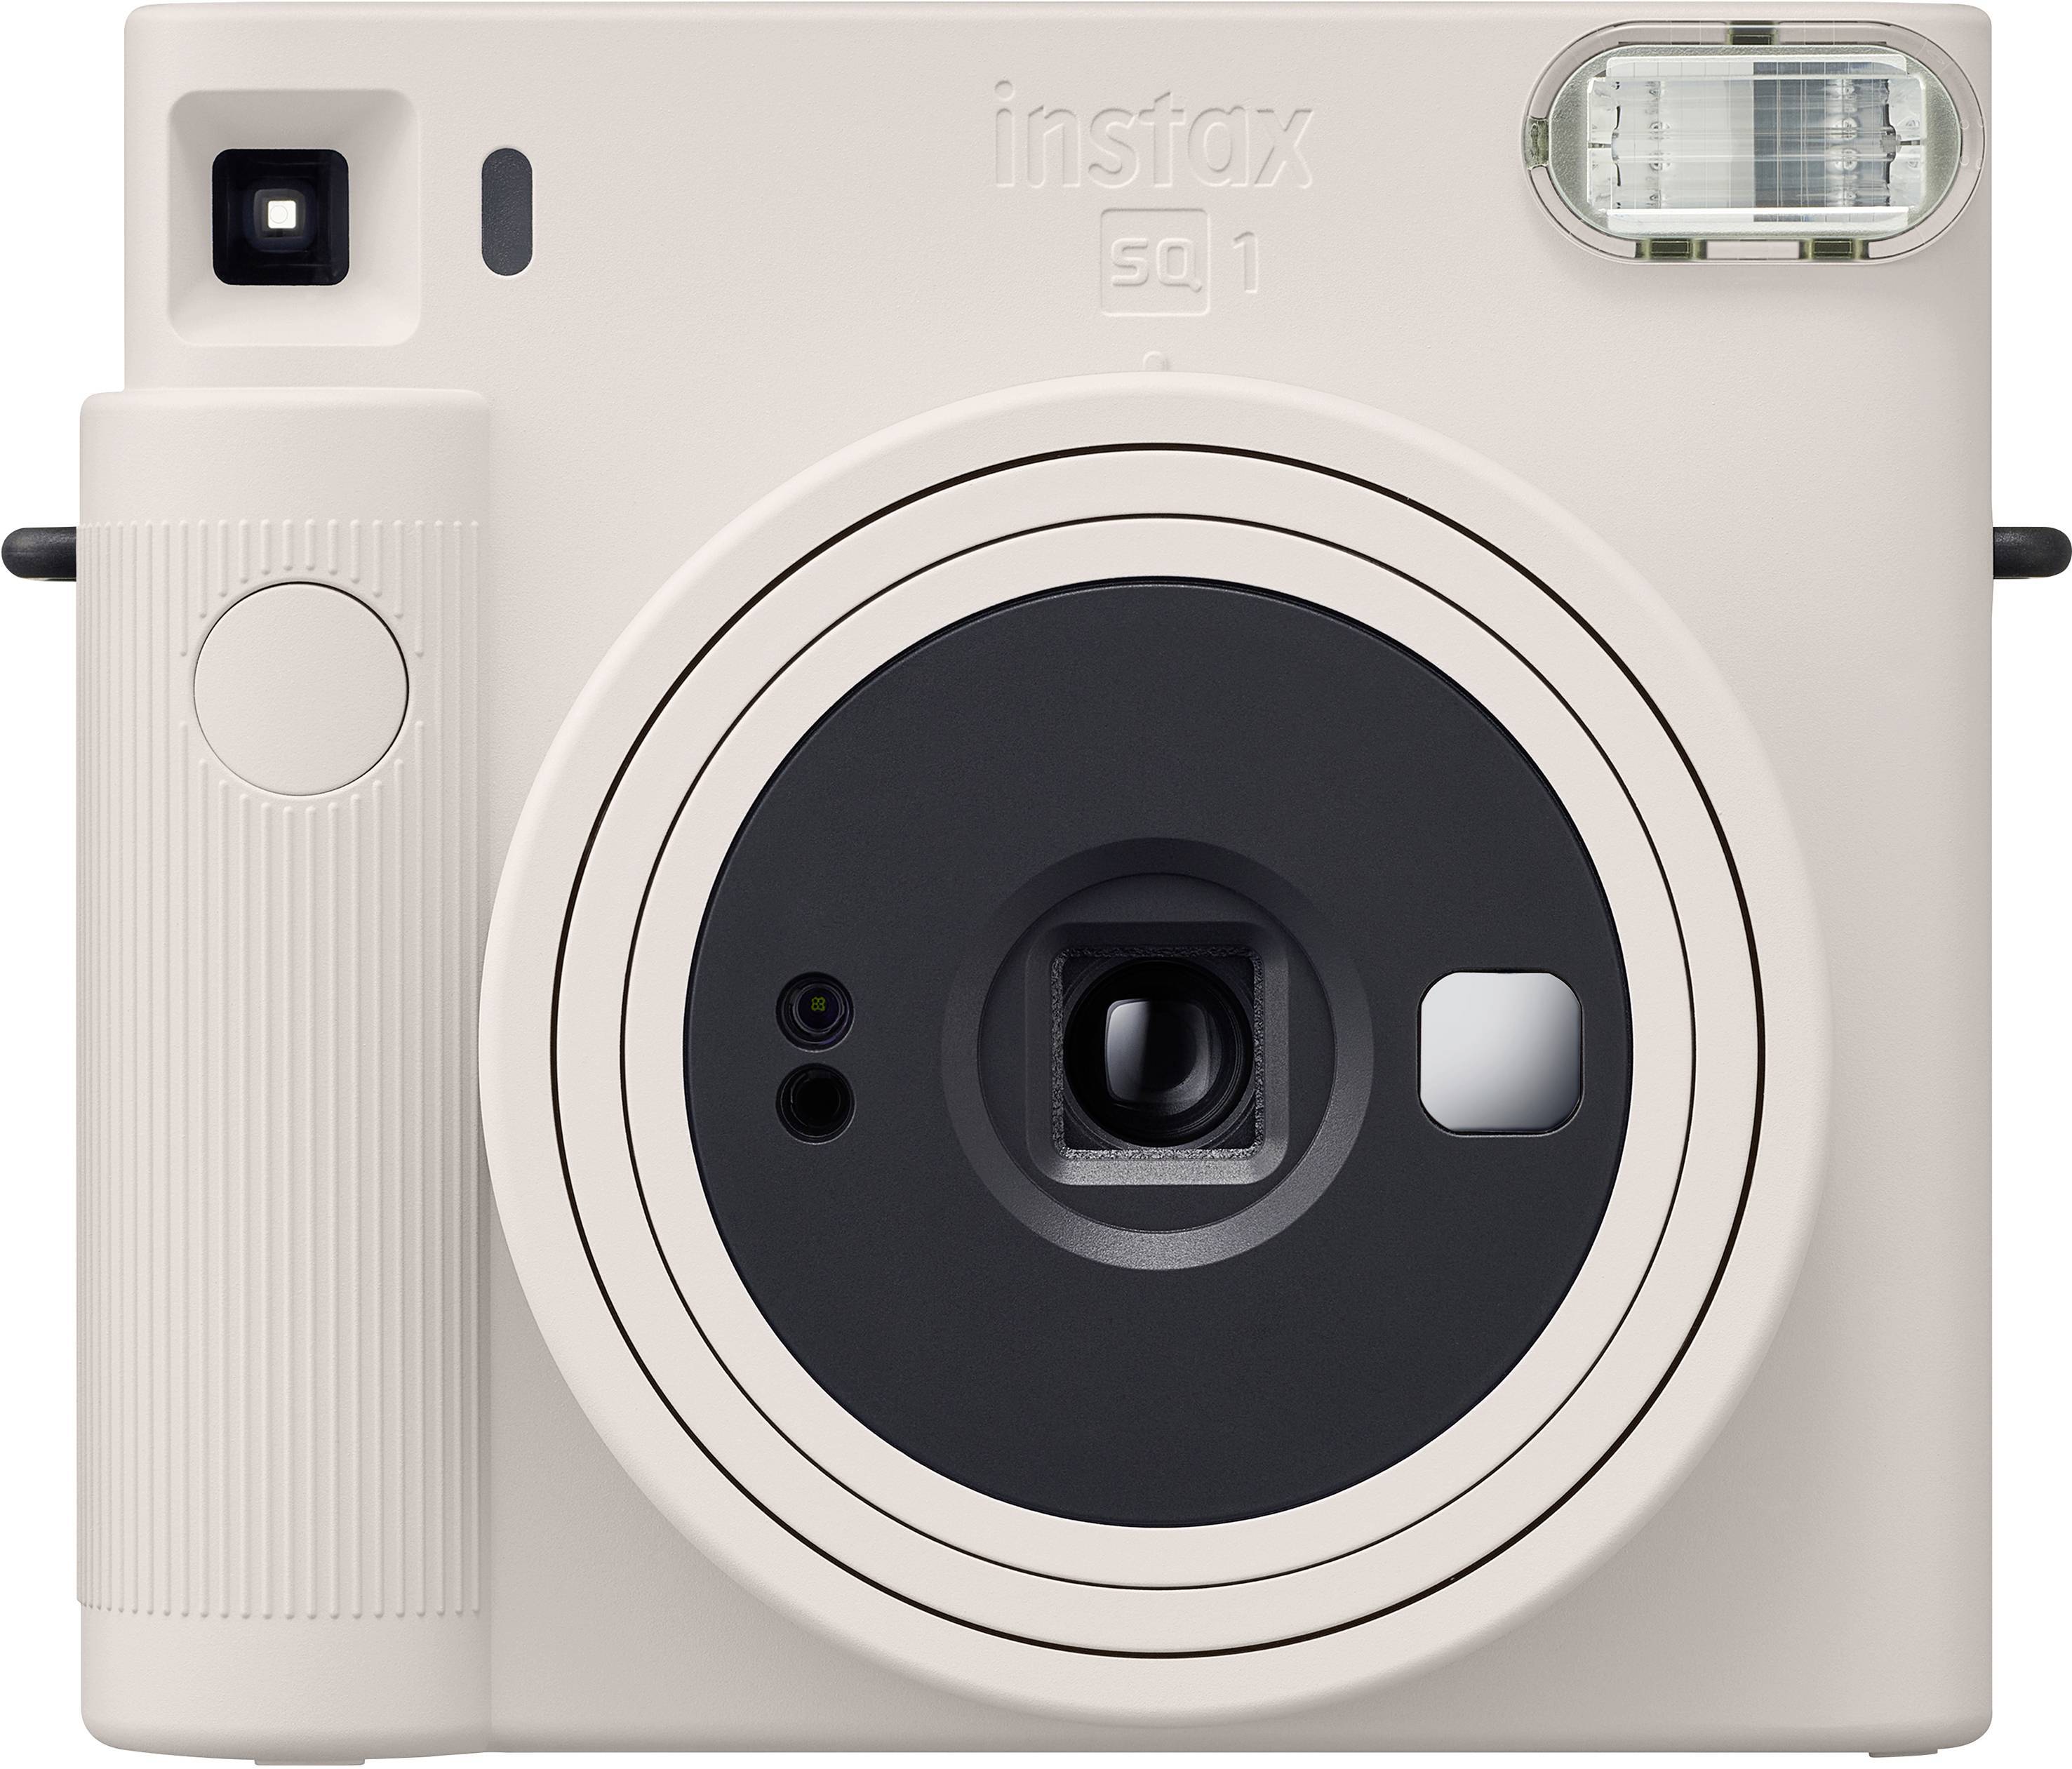 Camera Instax Square SQ1 Chalk White EX D - Albagame